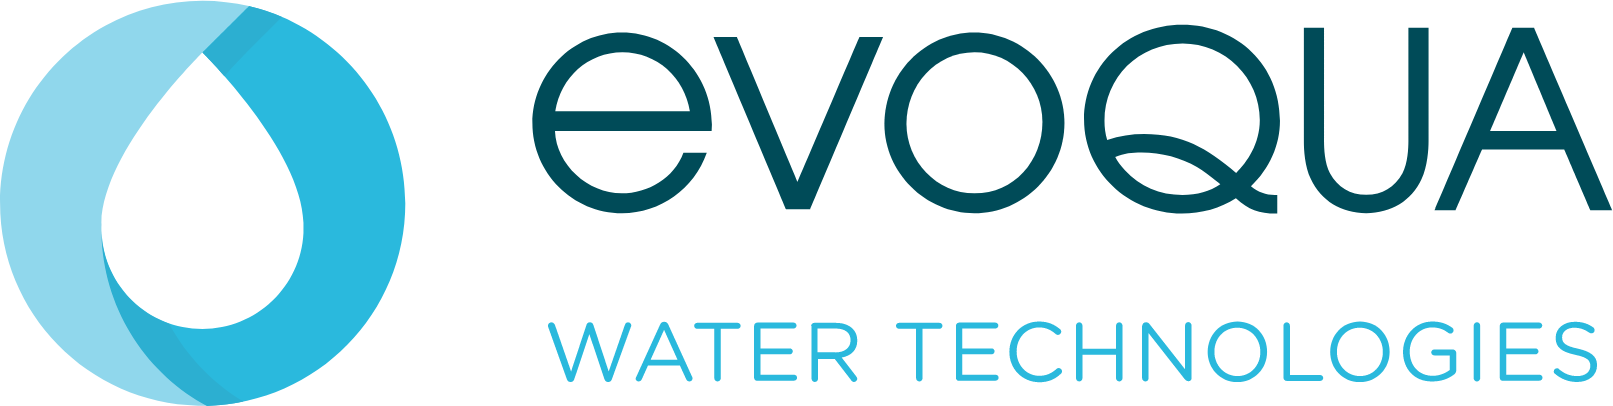 Evoqua Water Technologies
 logo large (transparent PNG)